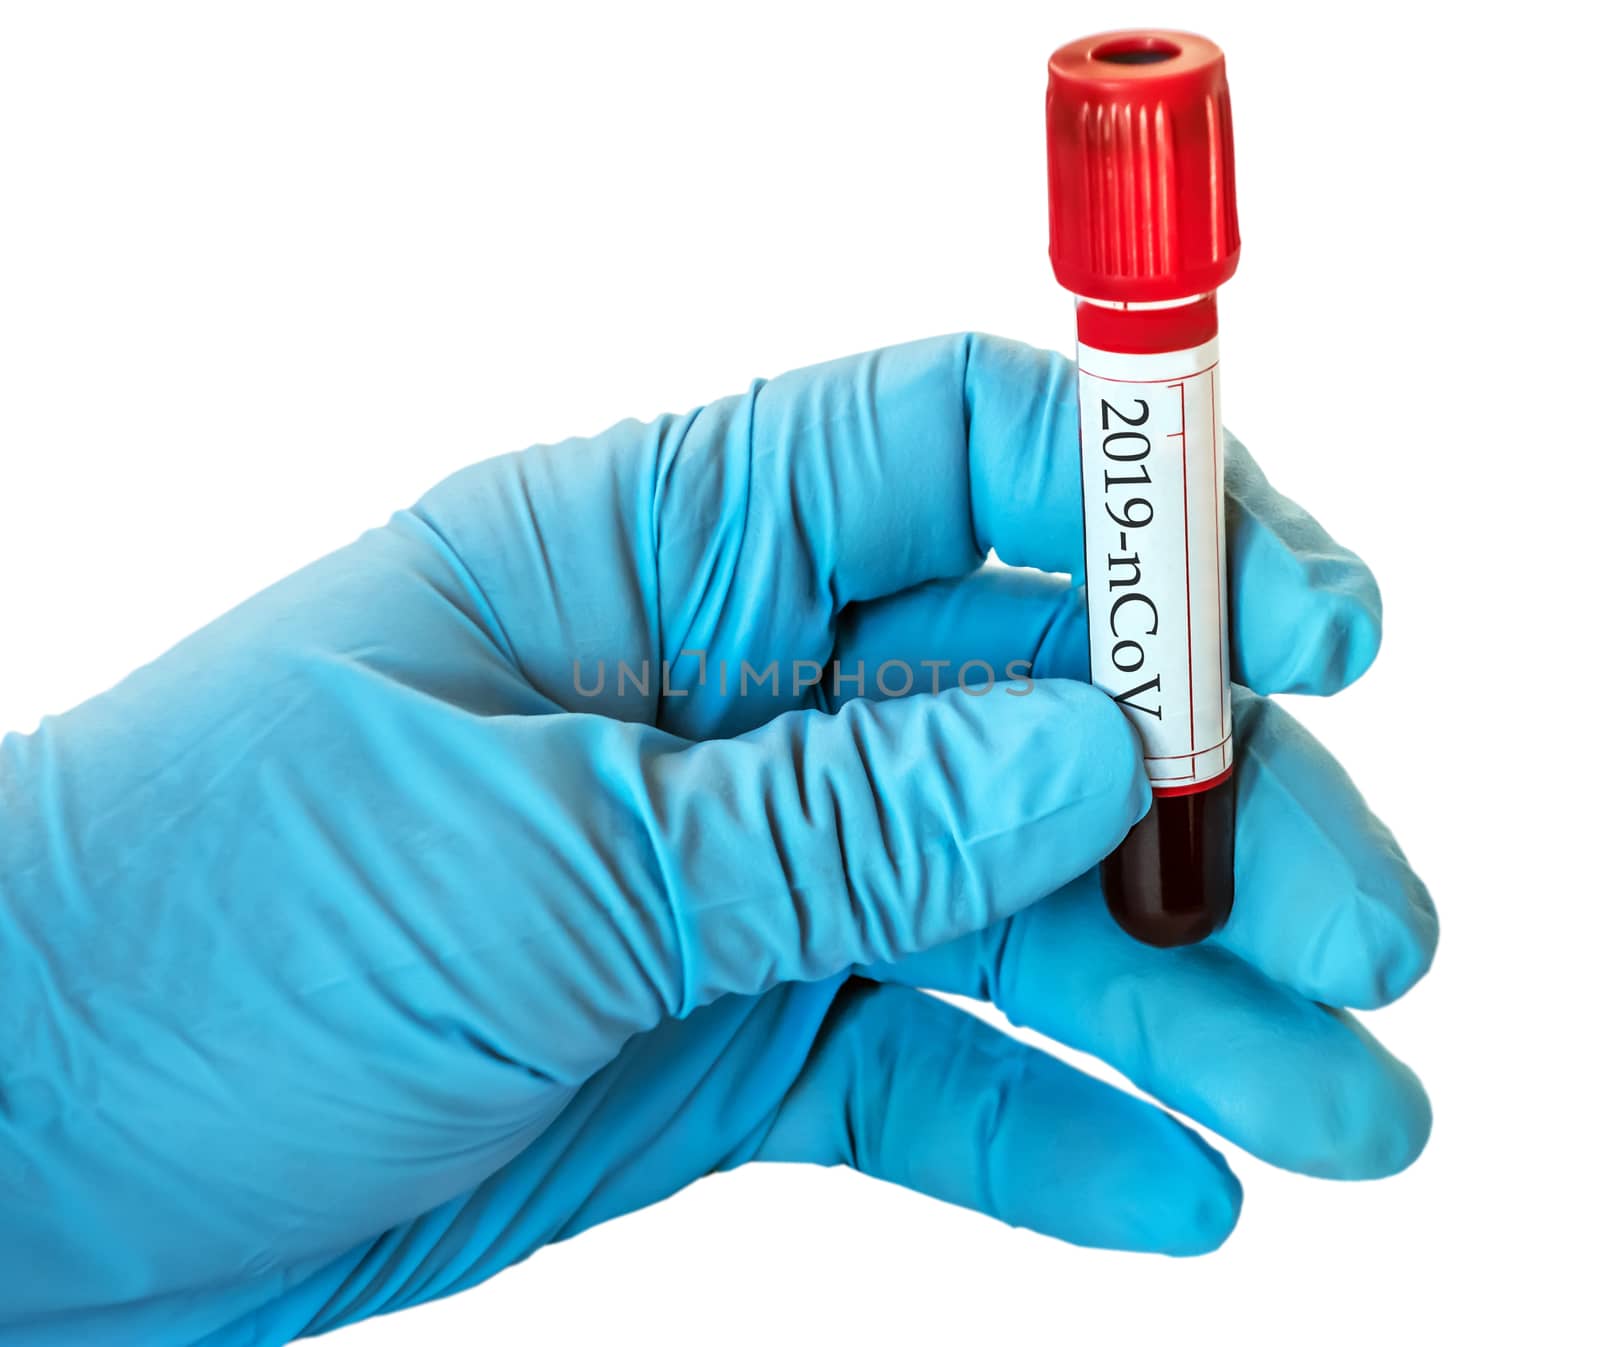 Pandemic Coronavirus 2019-nCoV Blood Sample Test Tube biochemical analysis Corona Virus in Lab.